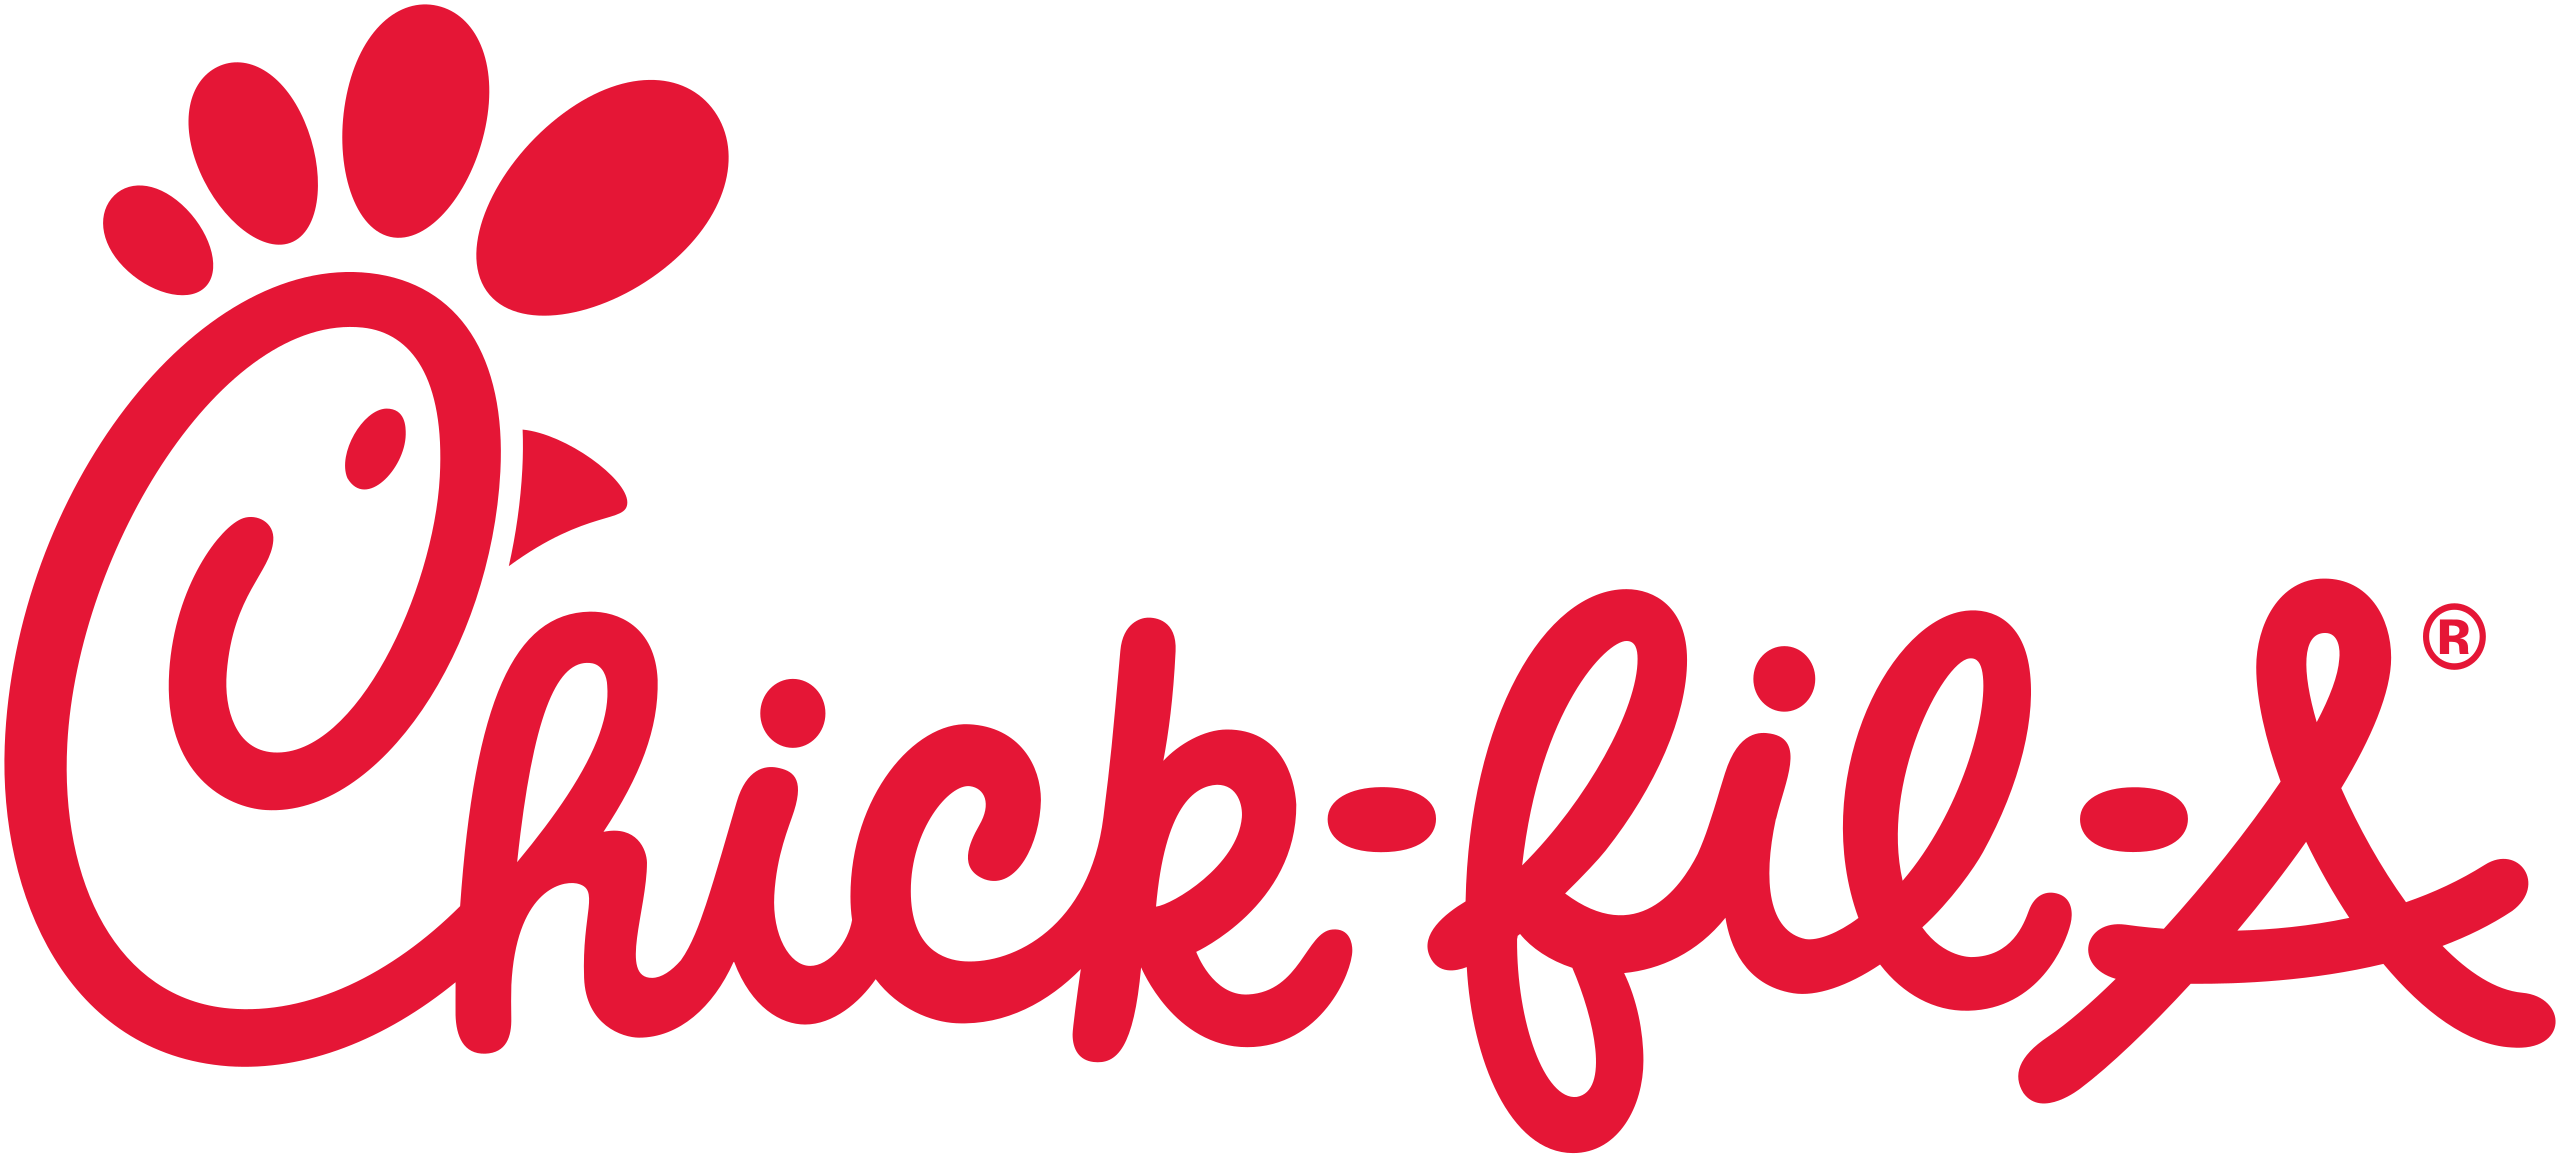 Chick-Fil-A sponsor logo